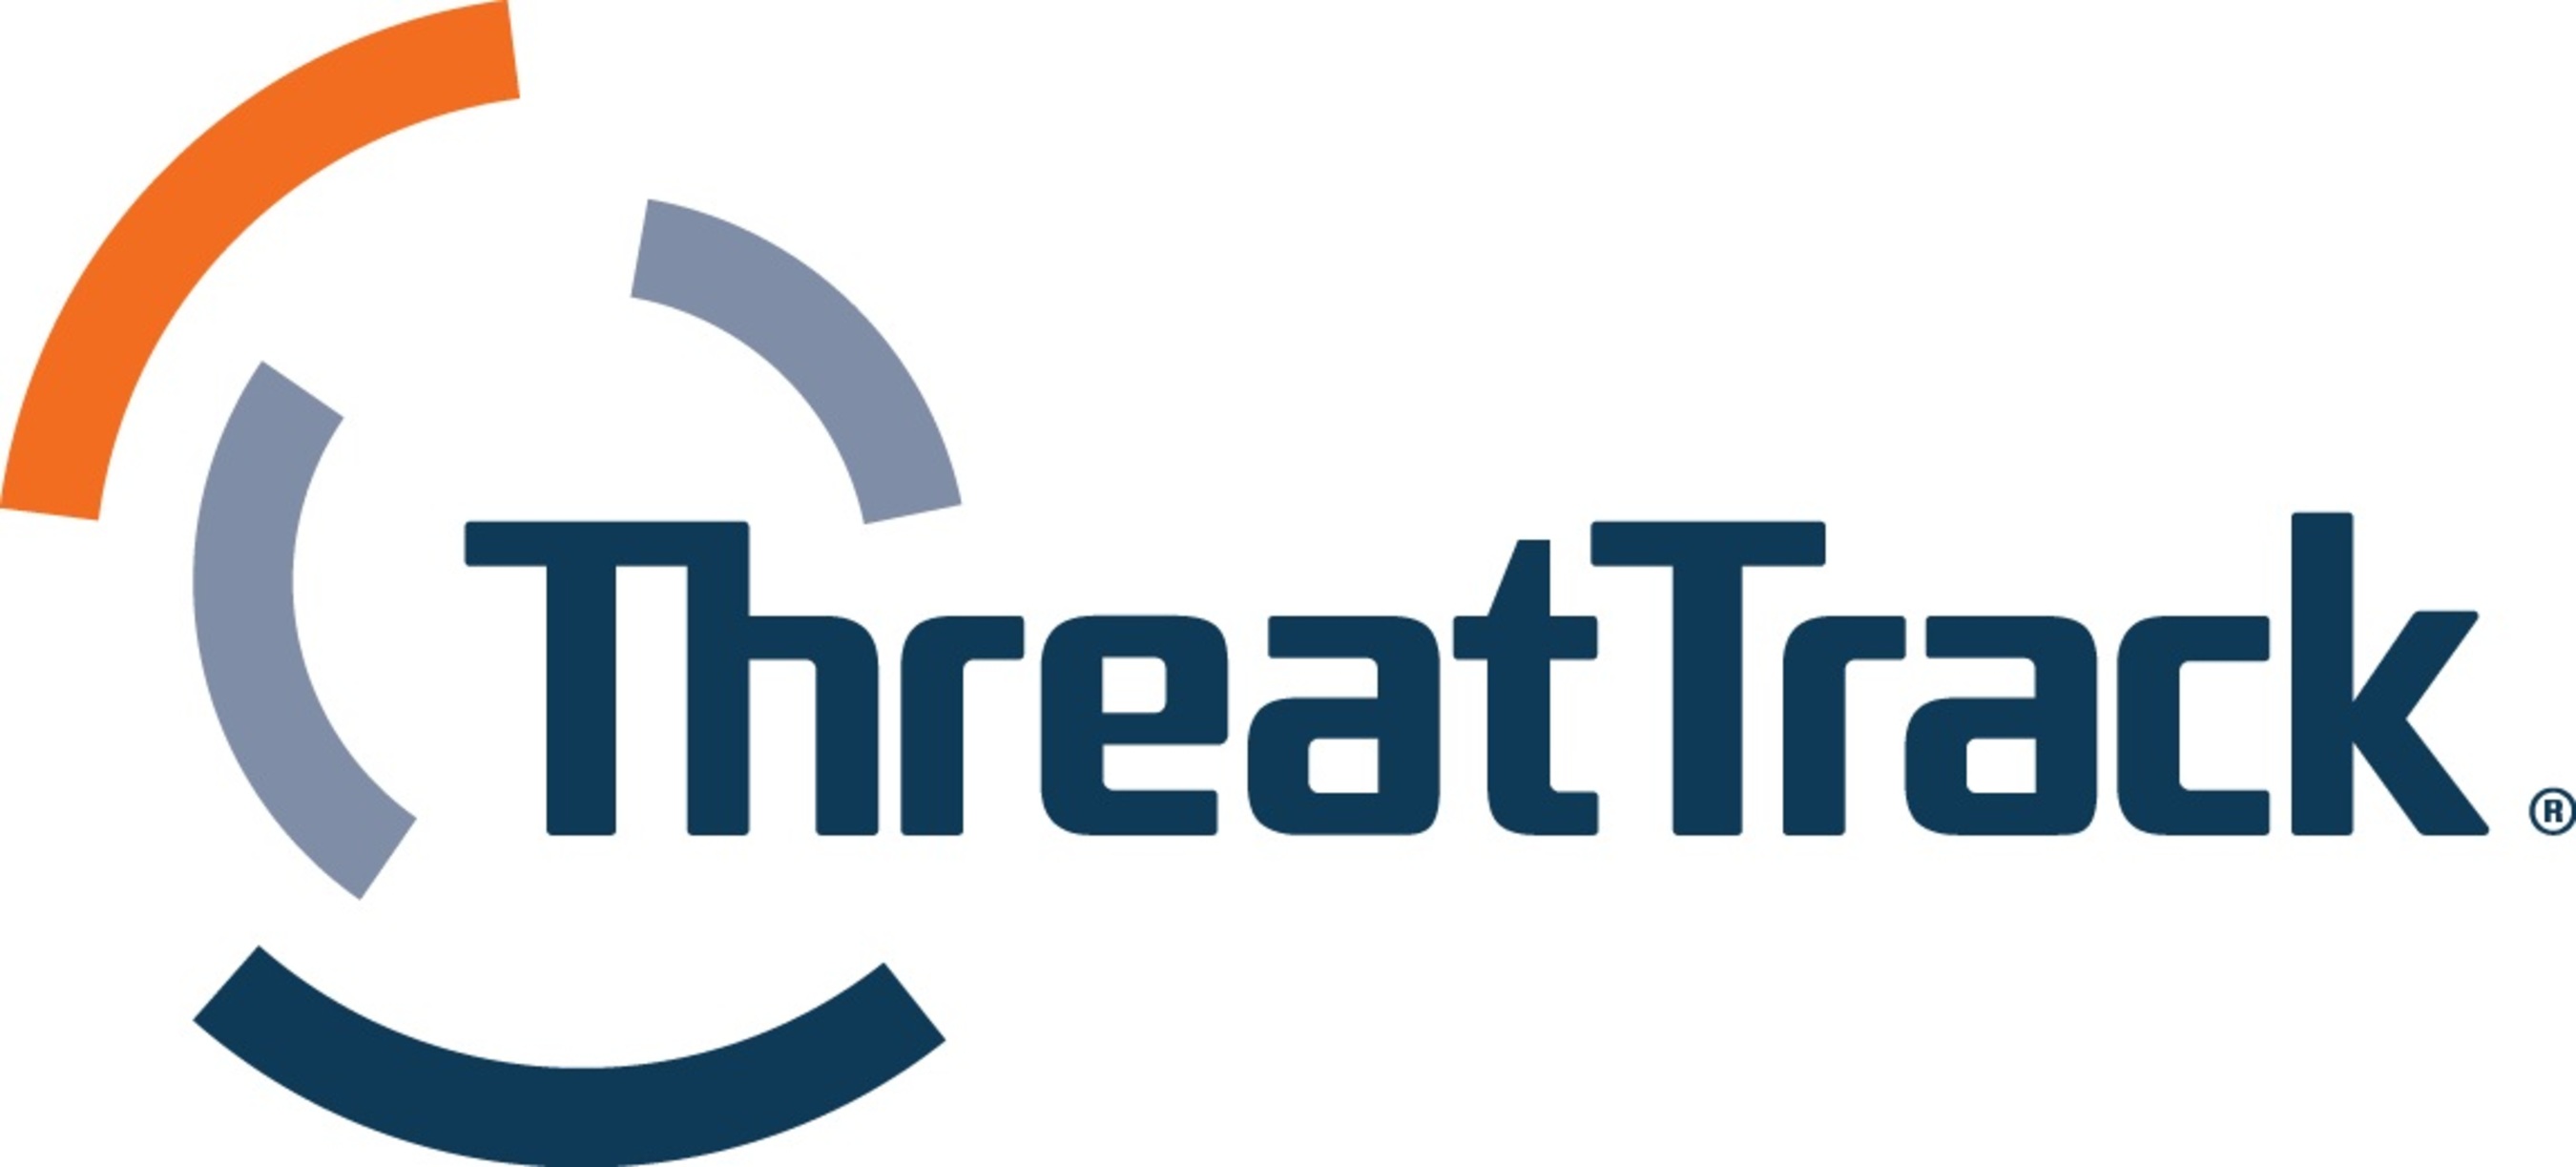 ThreatTrack Security logo